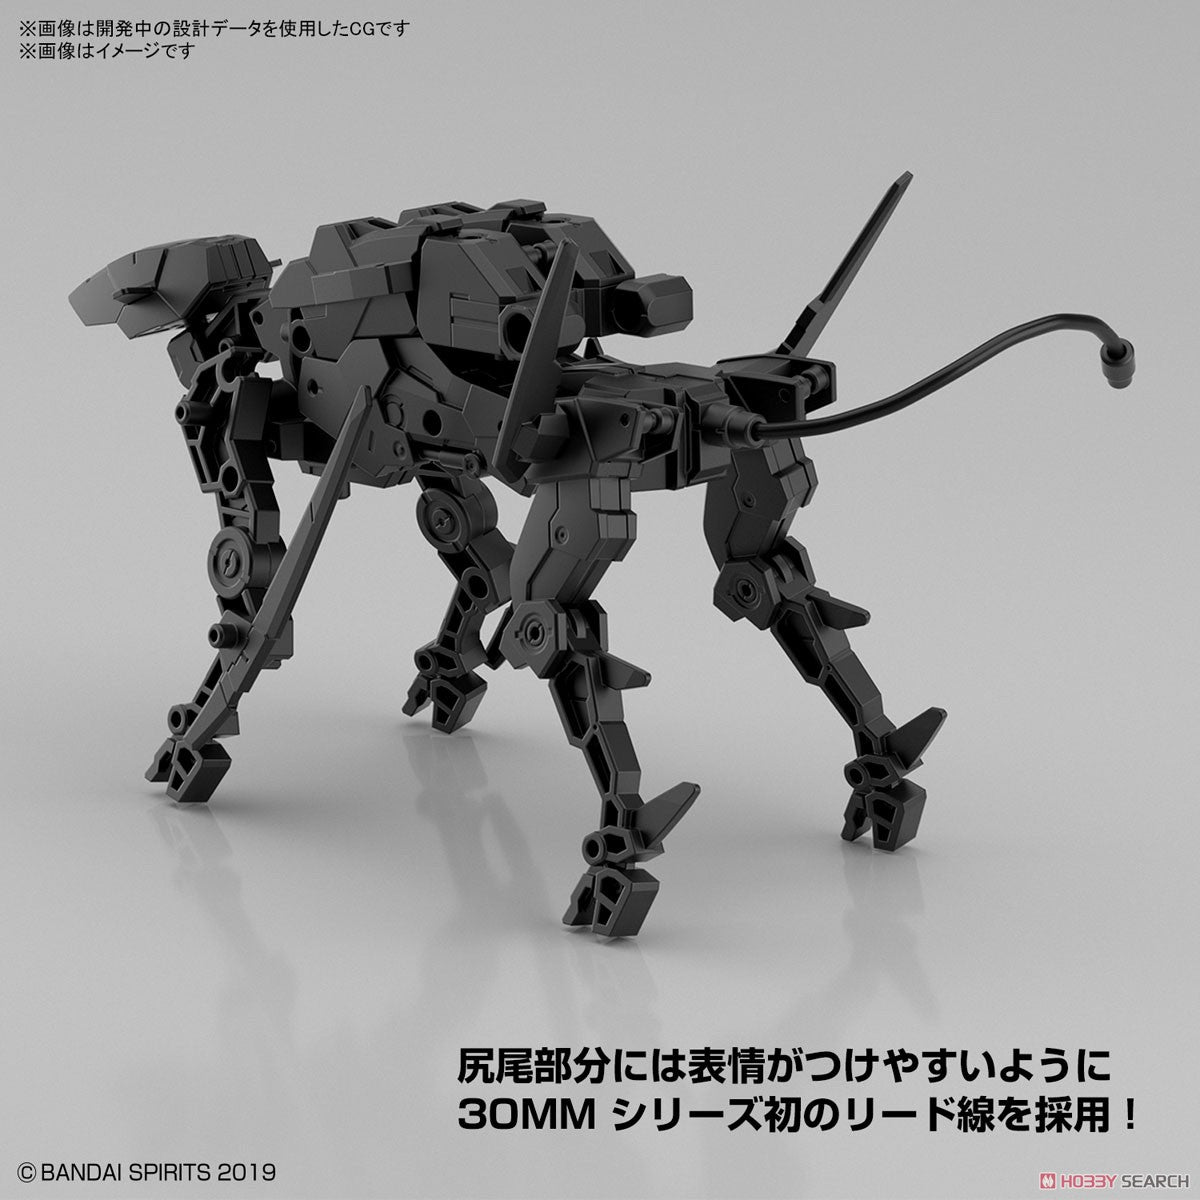 30MM - 1/144 - Extended Armament Vehicle (Dog Mecha Ver.)